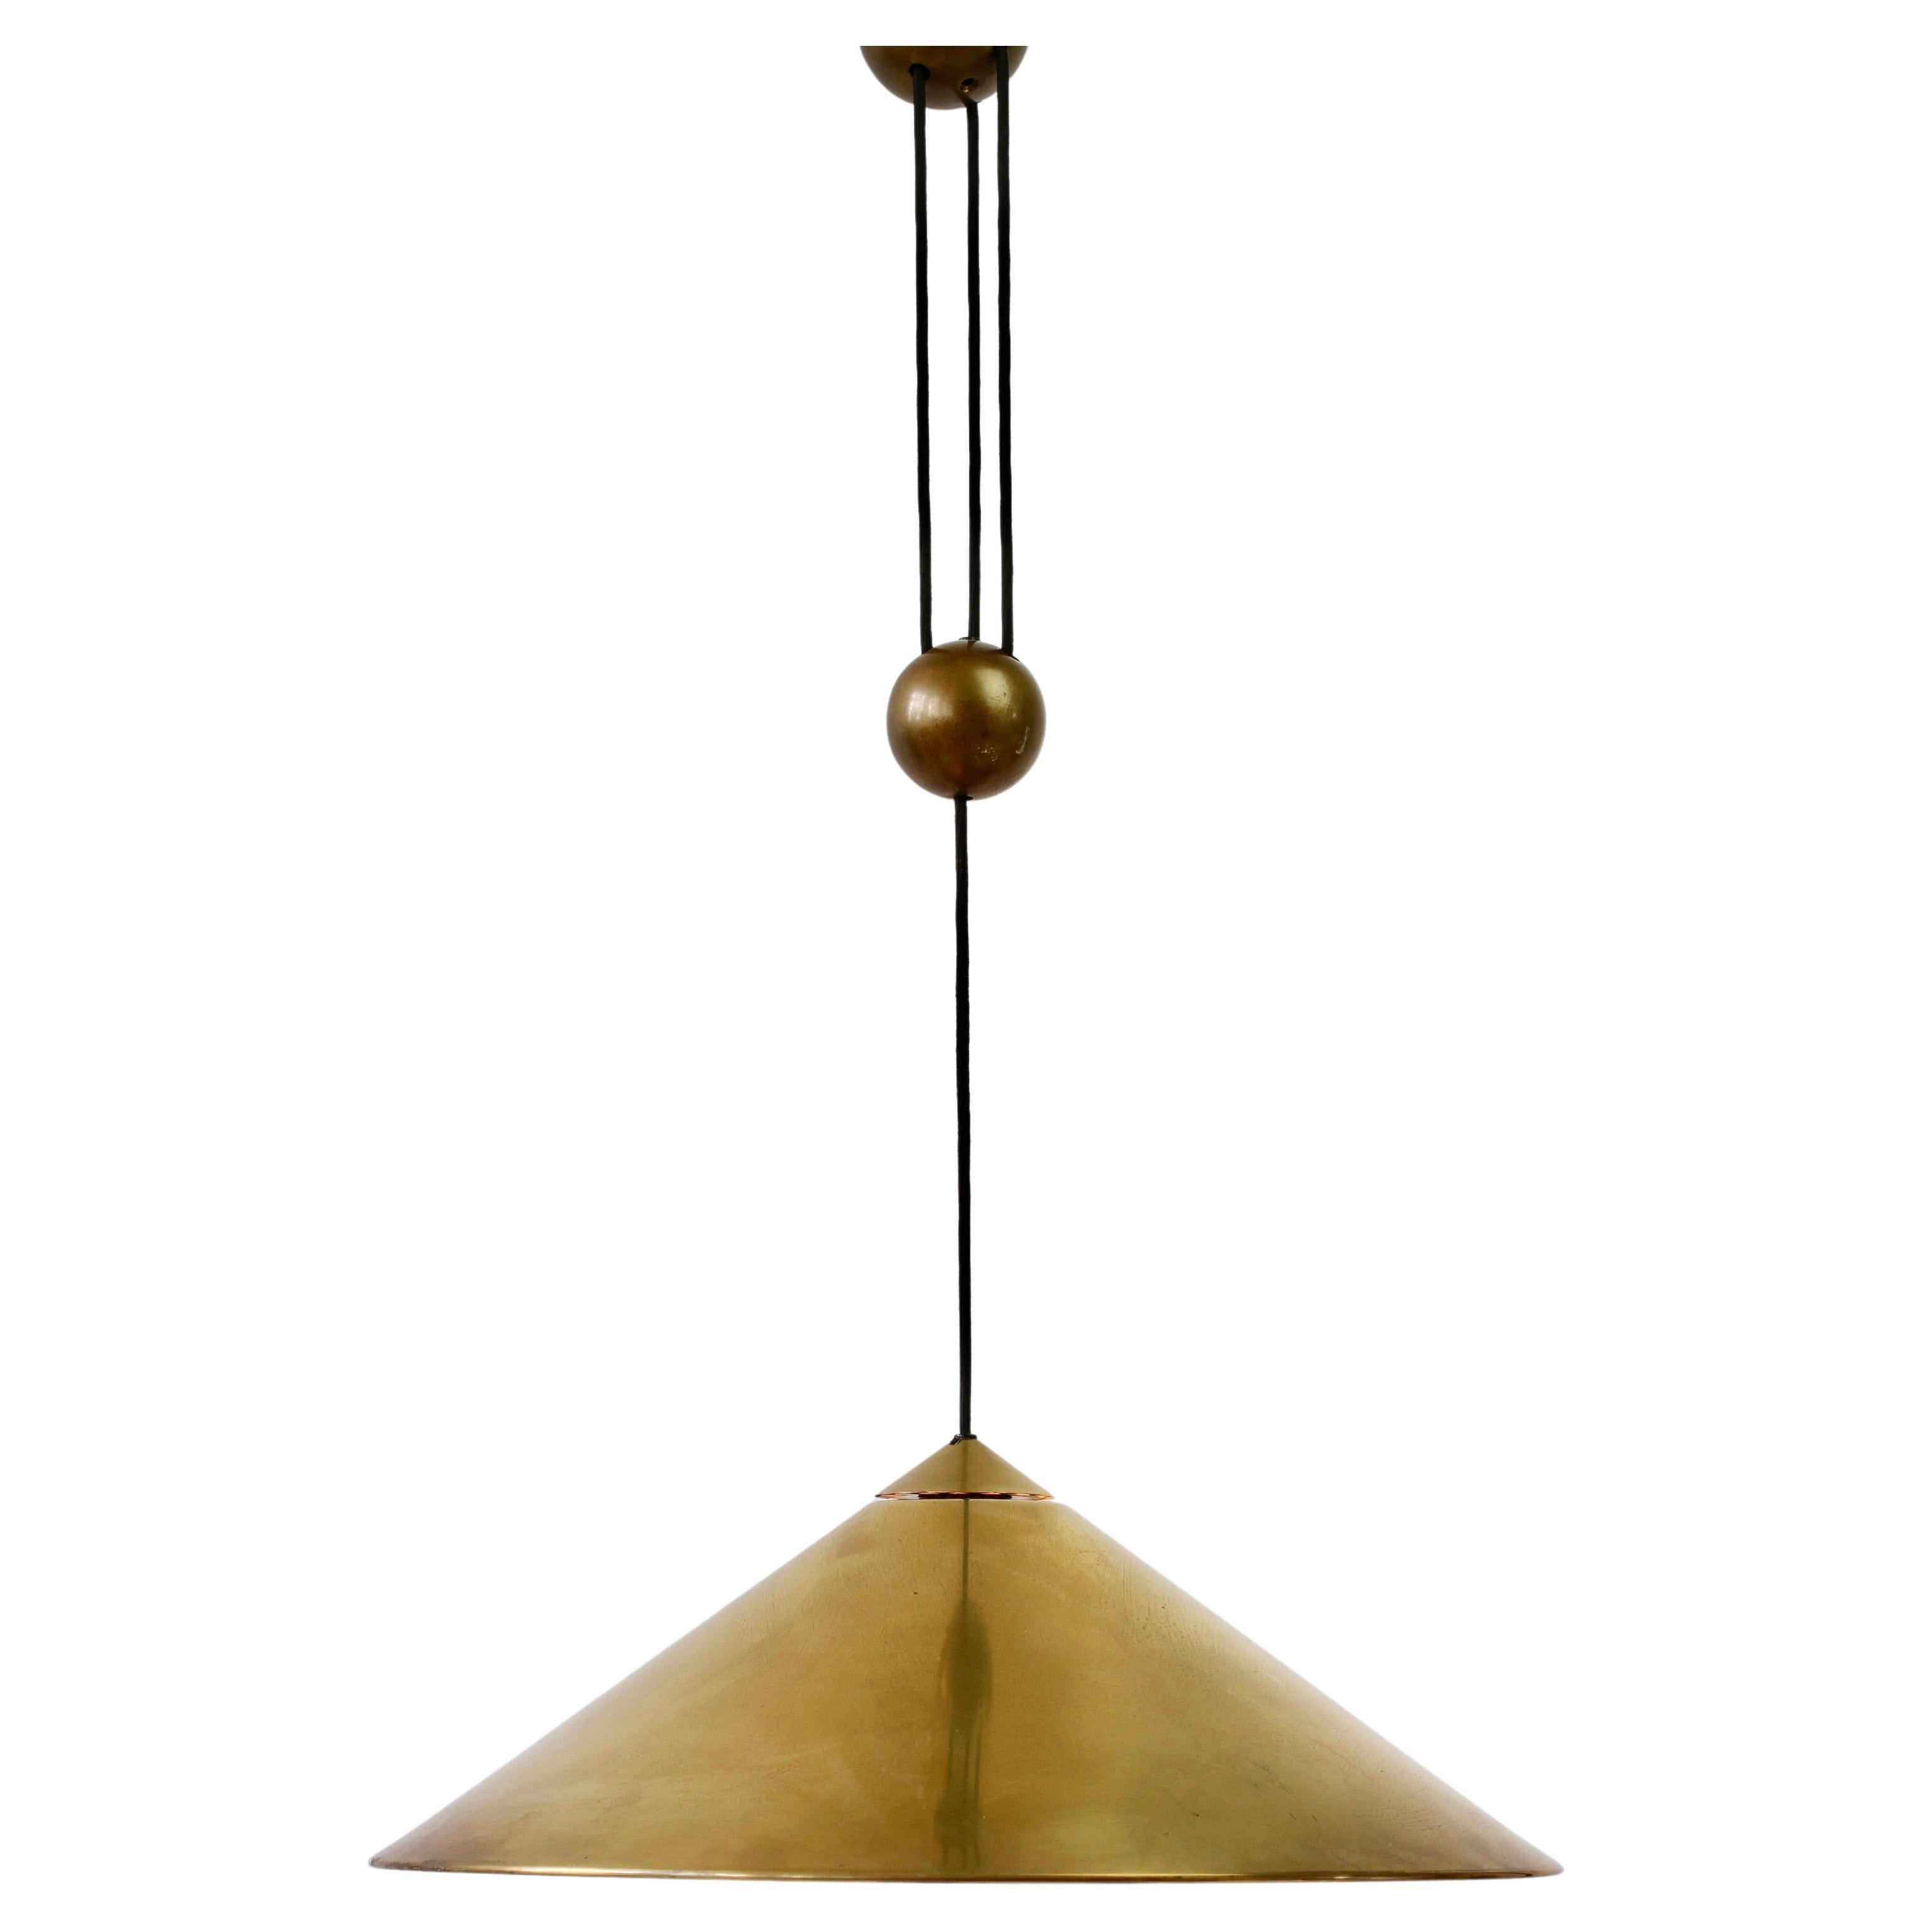 Florian Schulz Vintage Modernist Brass Counterbalanced Adjustable Pendant Light